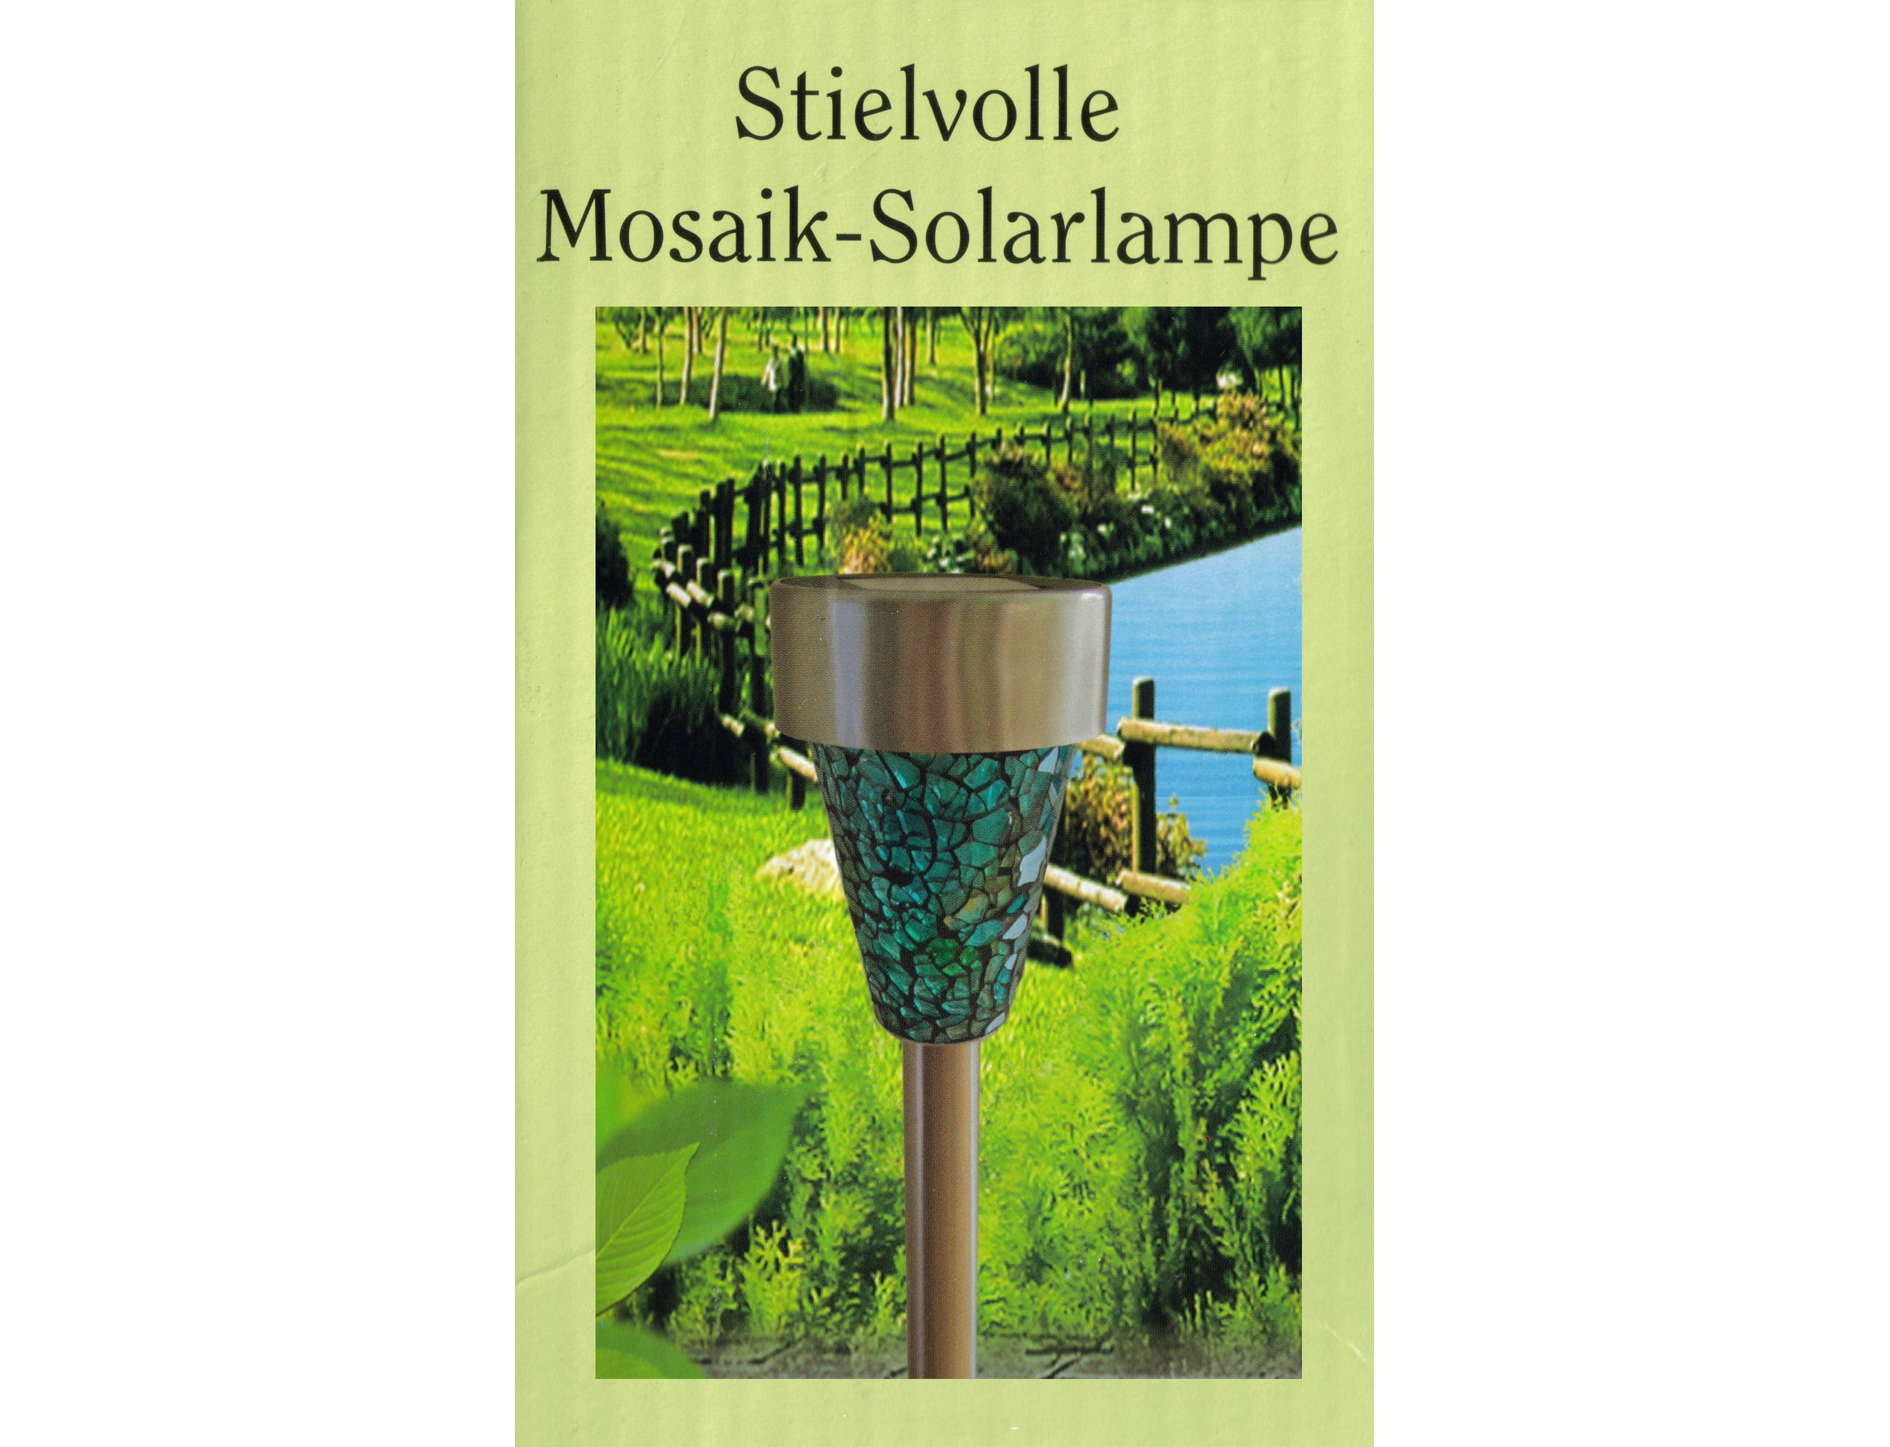 Stielvolle Mosaik-Solarlampe